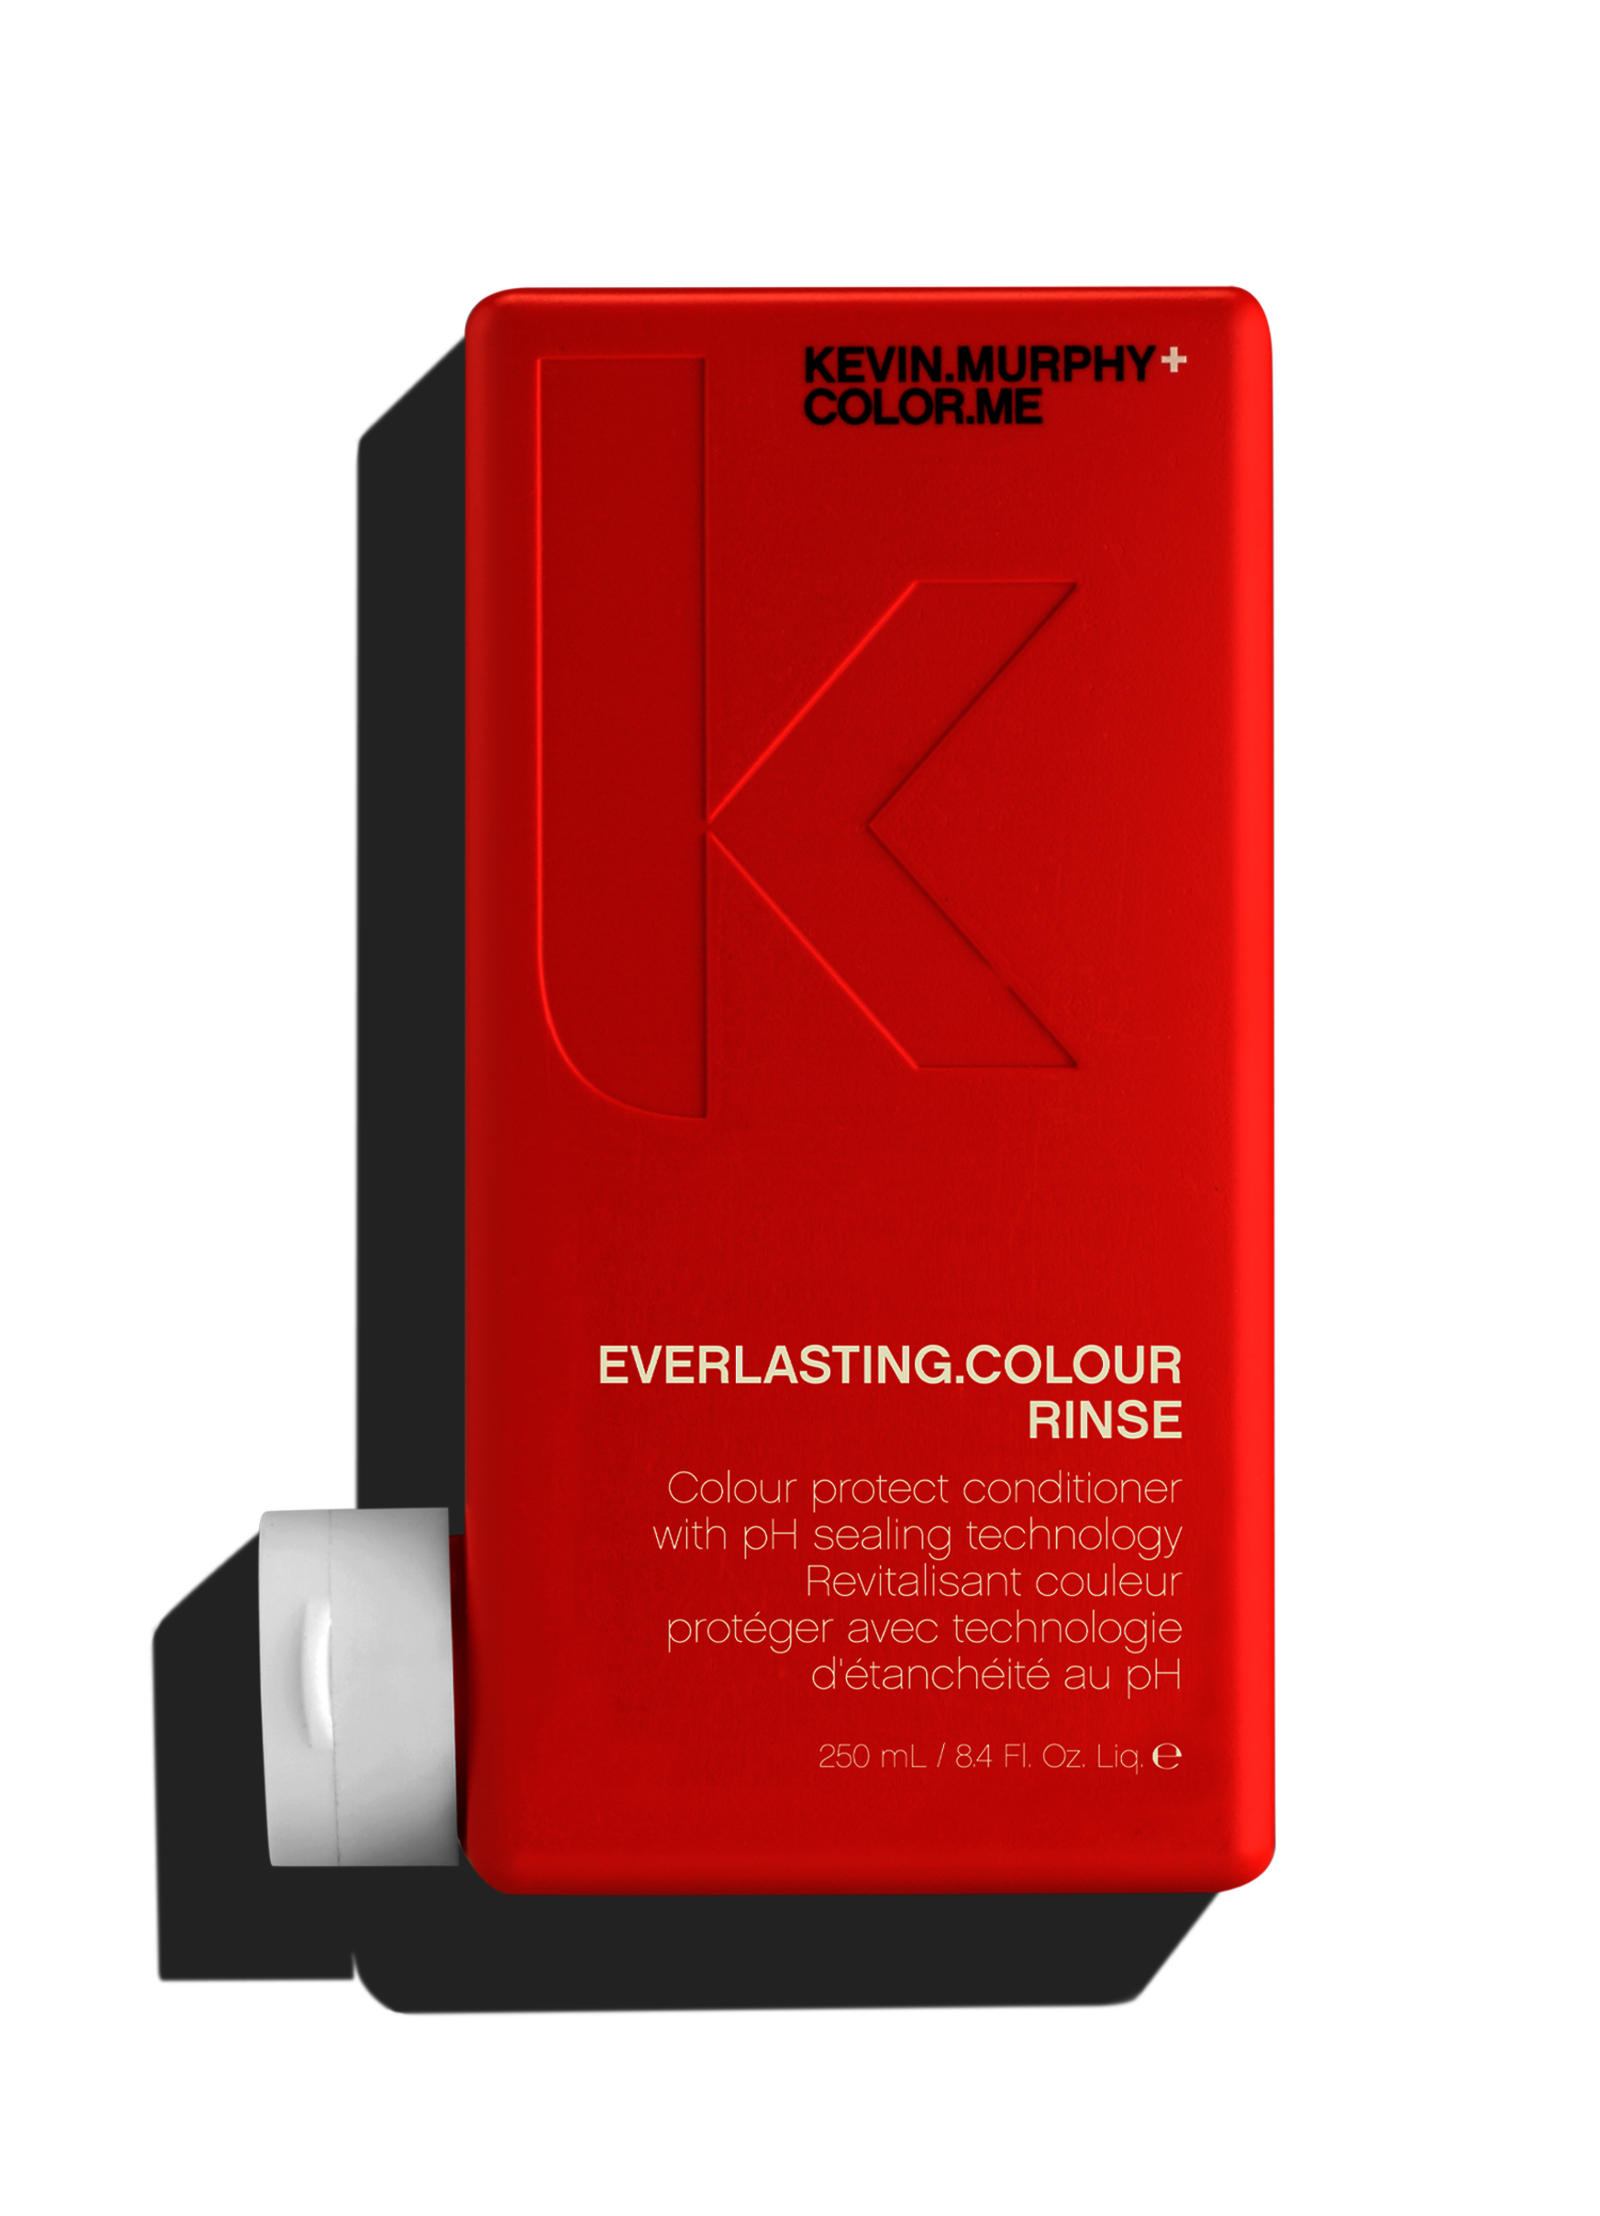 KM Everlasting Colour Rinse